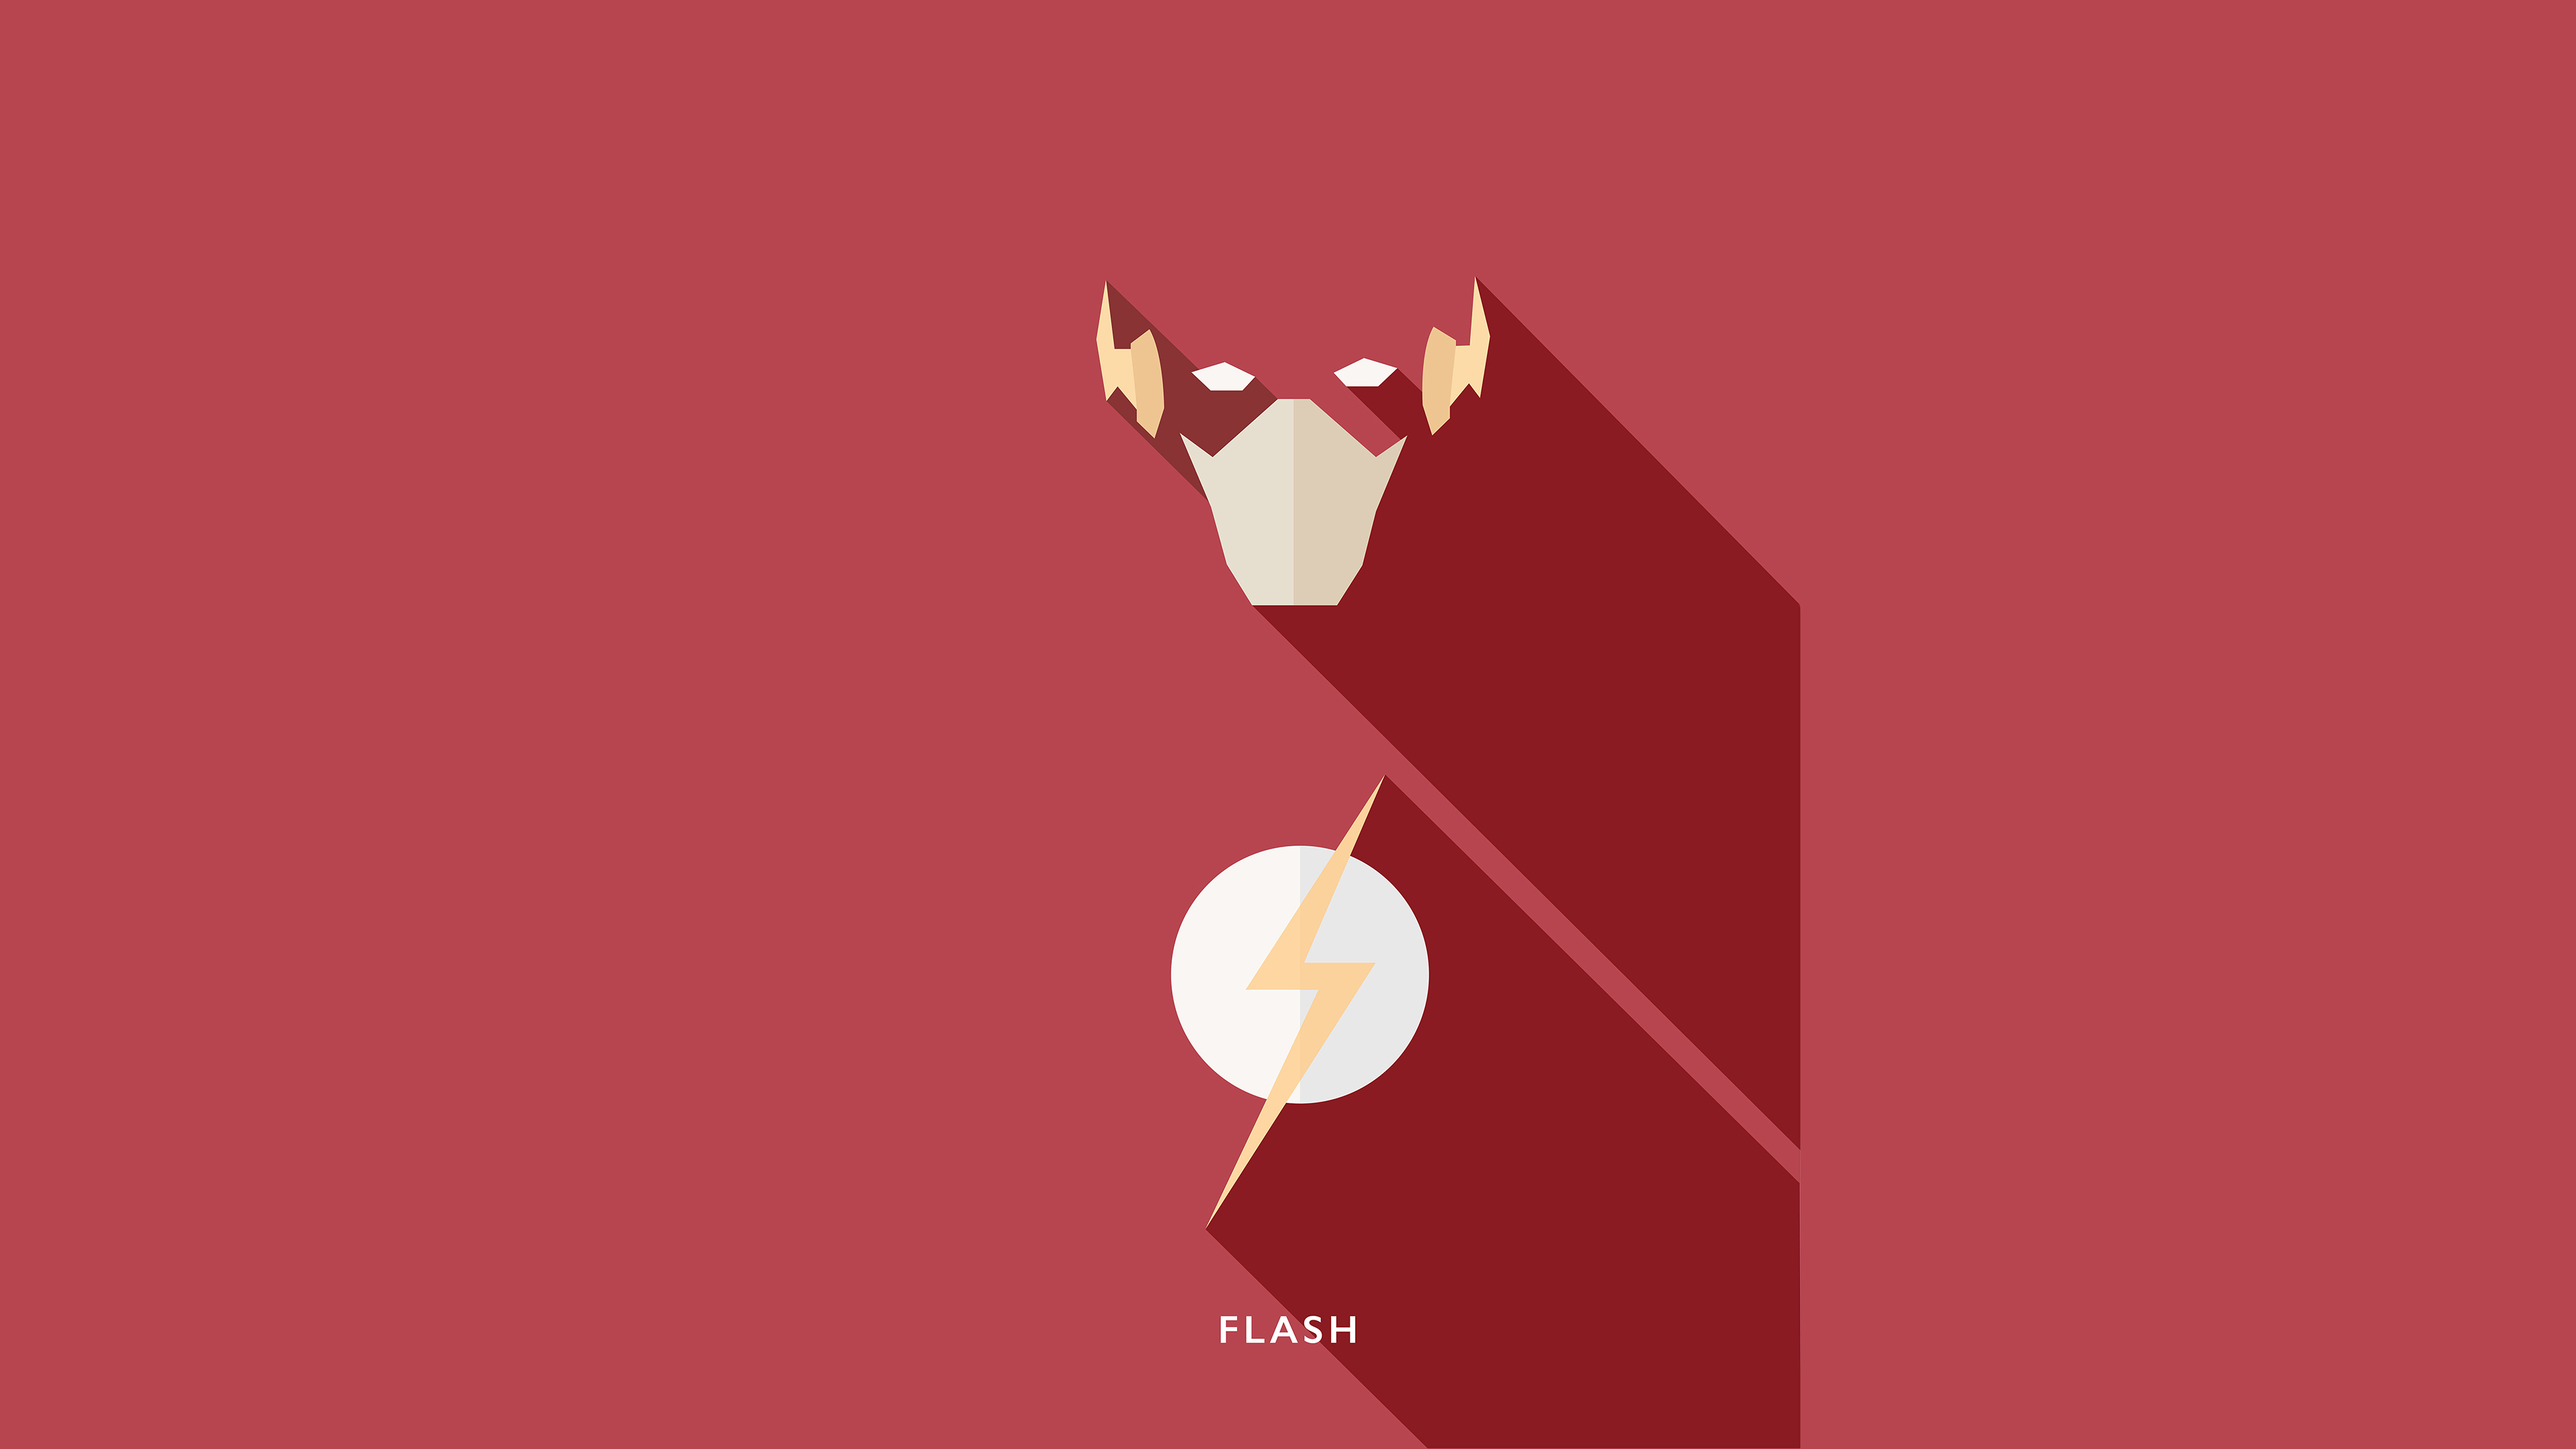 Descarga gratuita de fondo de pantalla para móvil de Minimalista, Historietas, Dc Comics, The Flash.